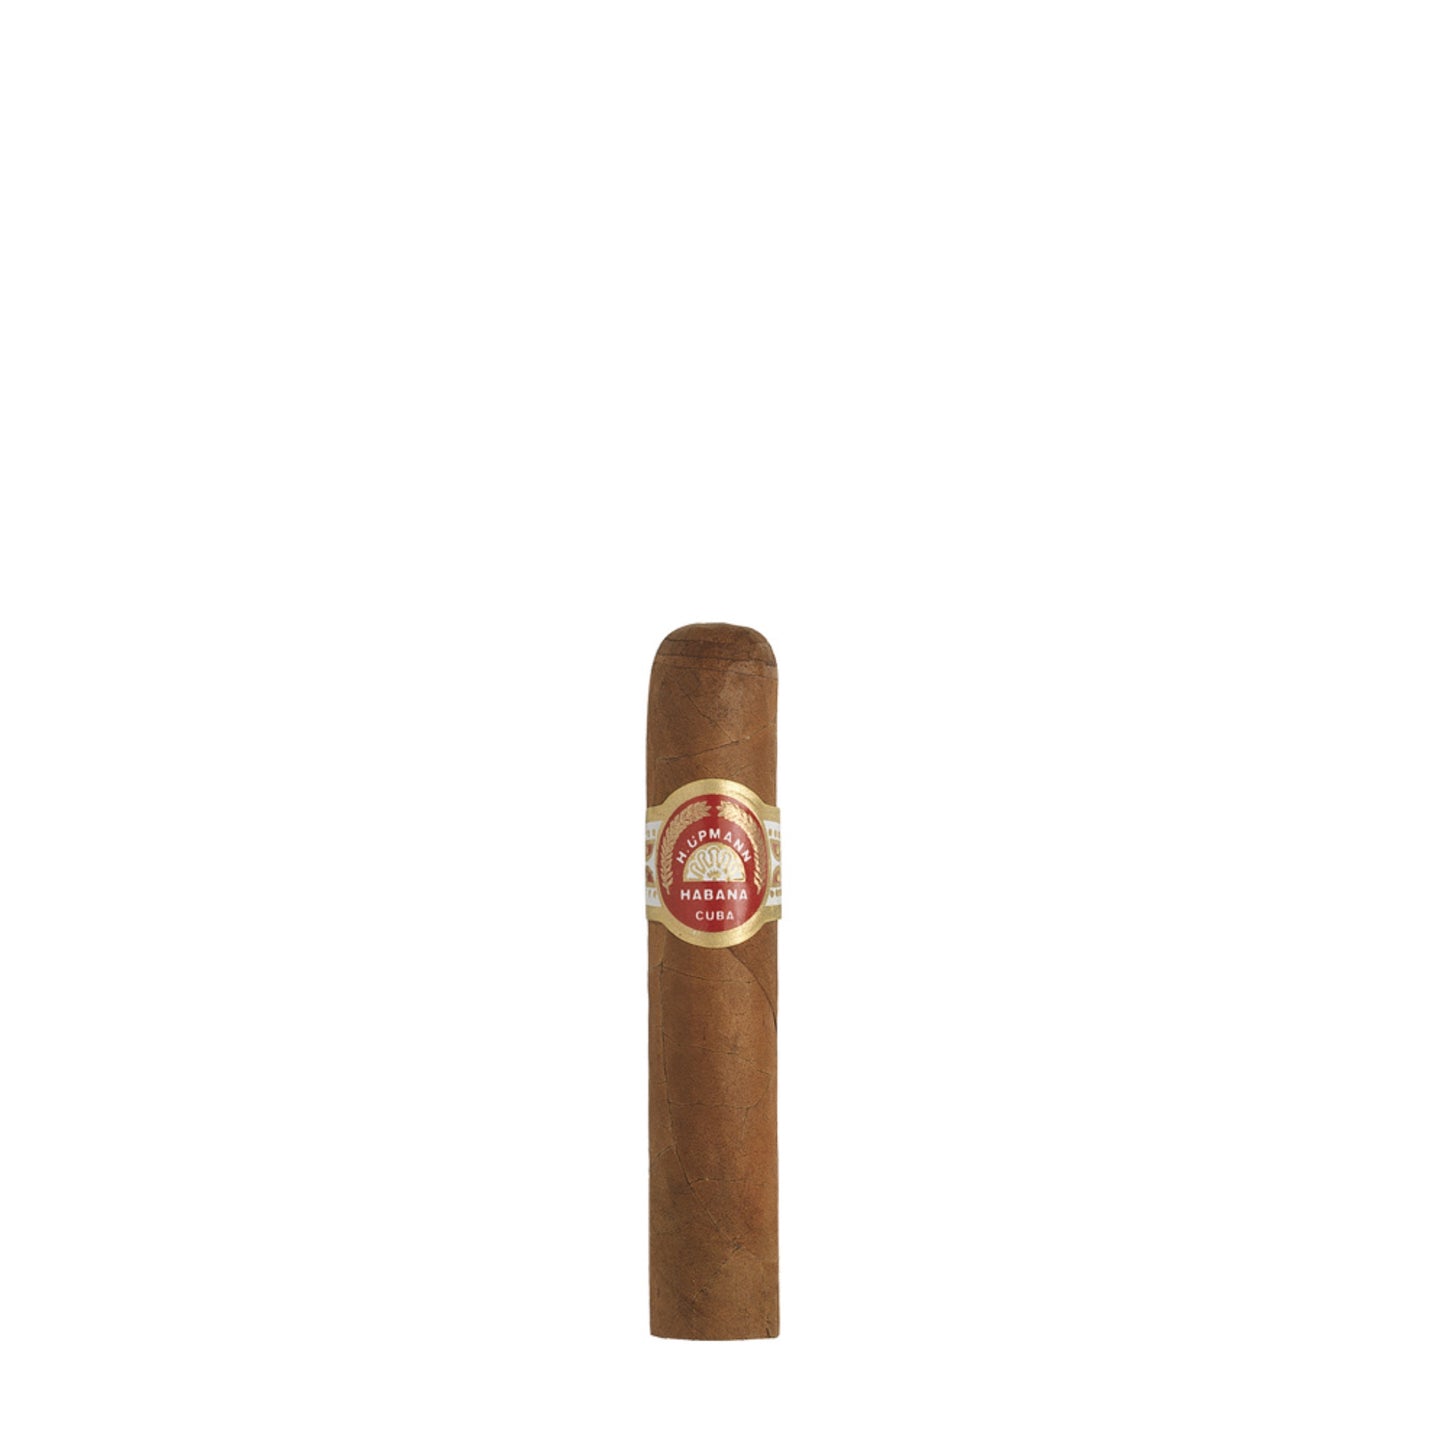 Load image into Gallery viewer, H Upmann half corona cigar
